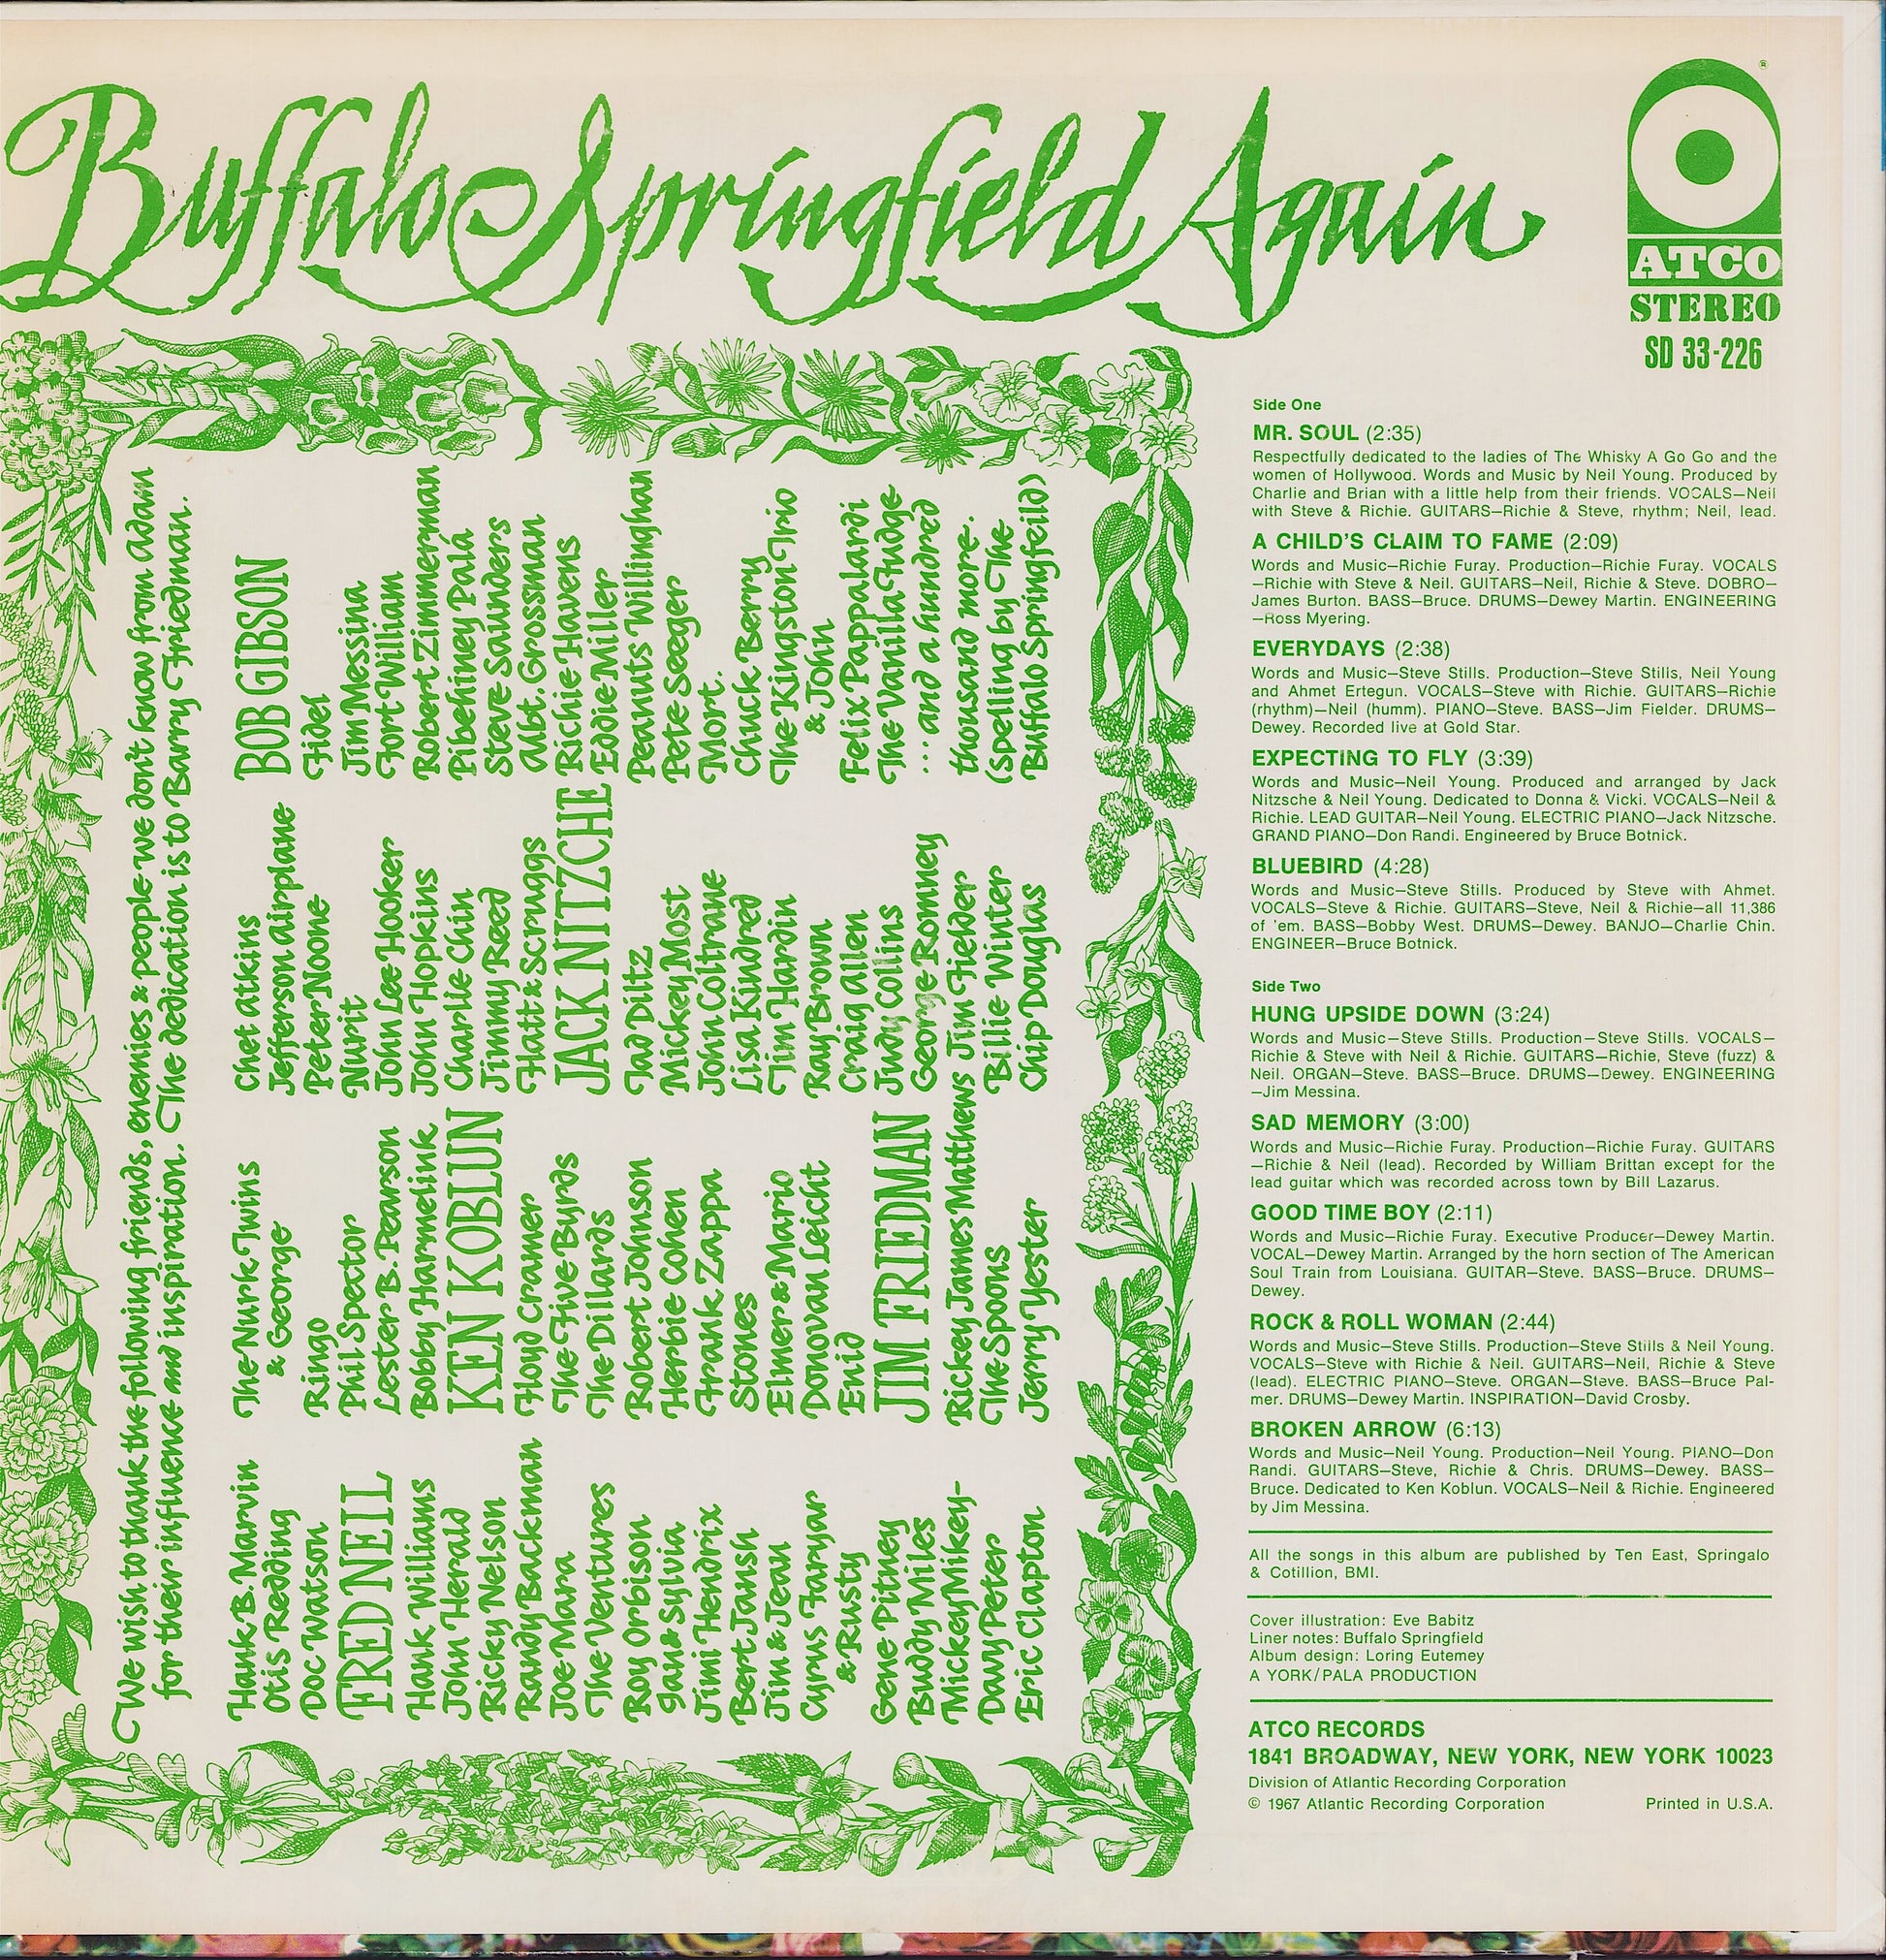 Buffalo Springfield - Buffalo Springfield Again Vinyl LP US